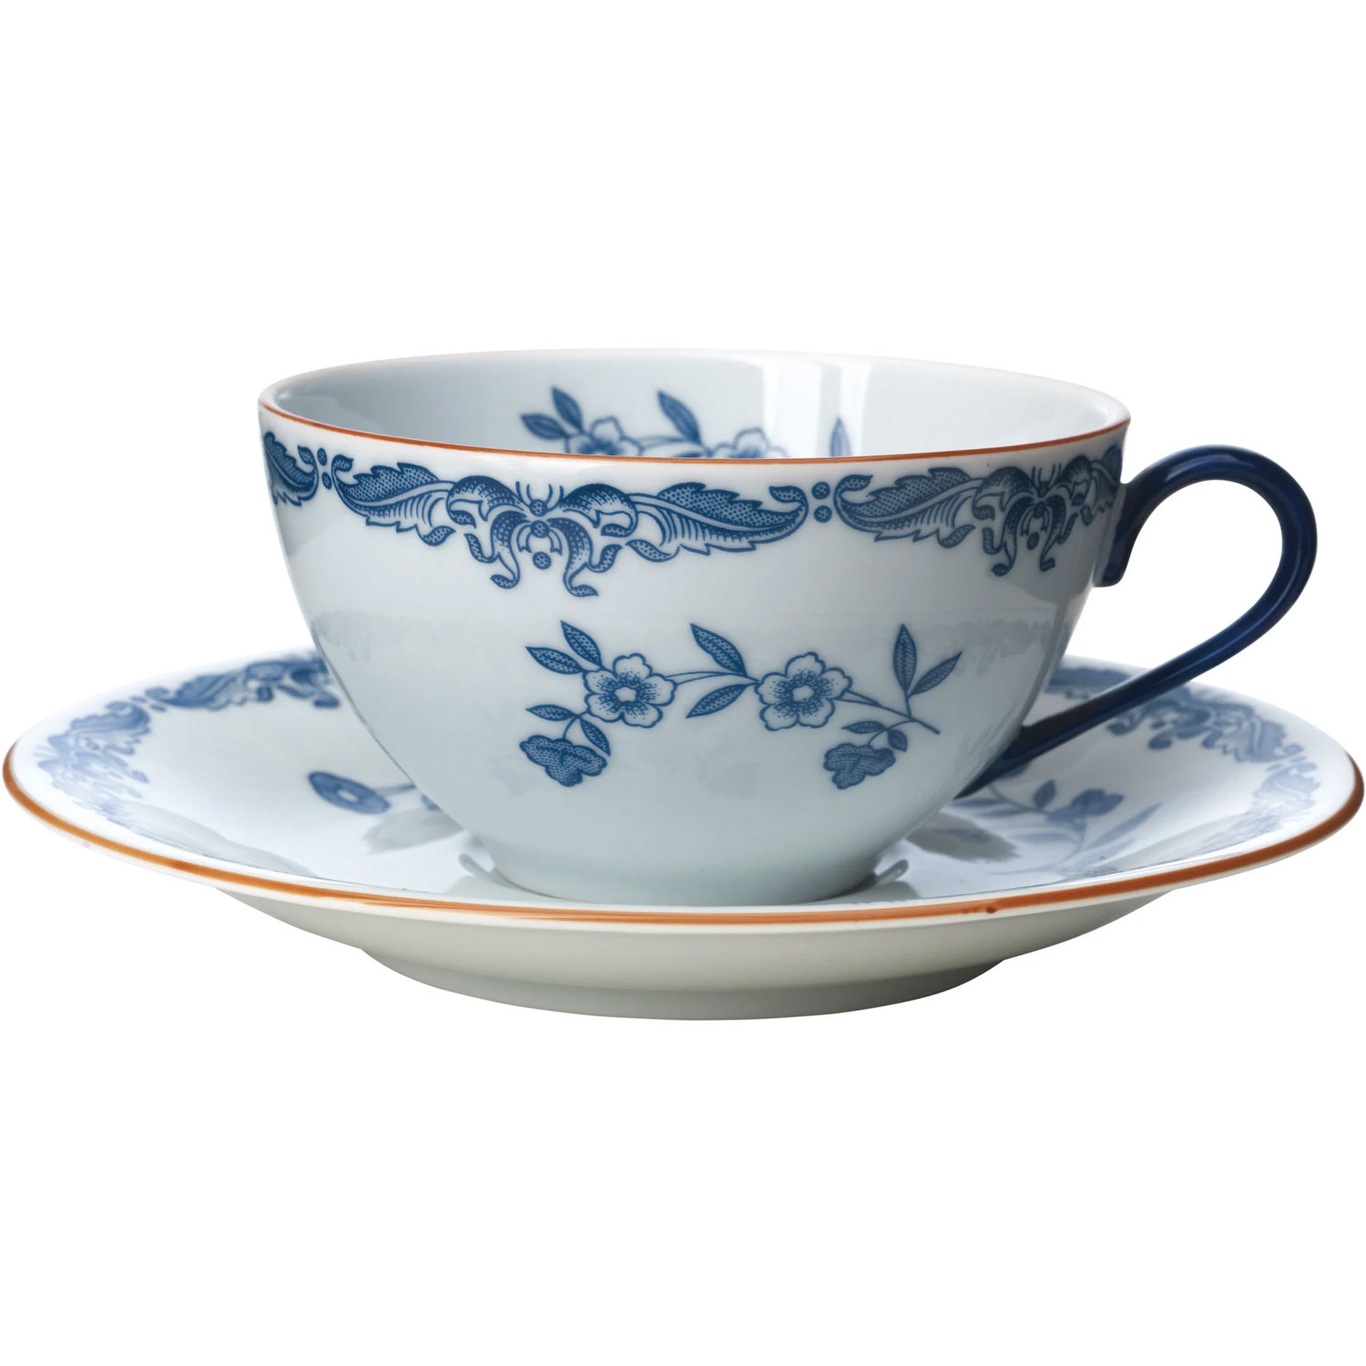 Ostindia Teacup With Saucer, 27 cl